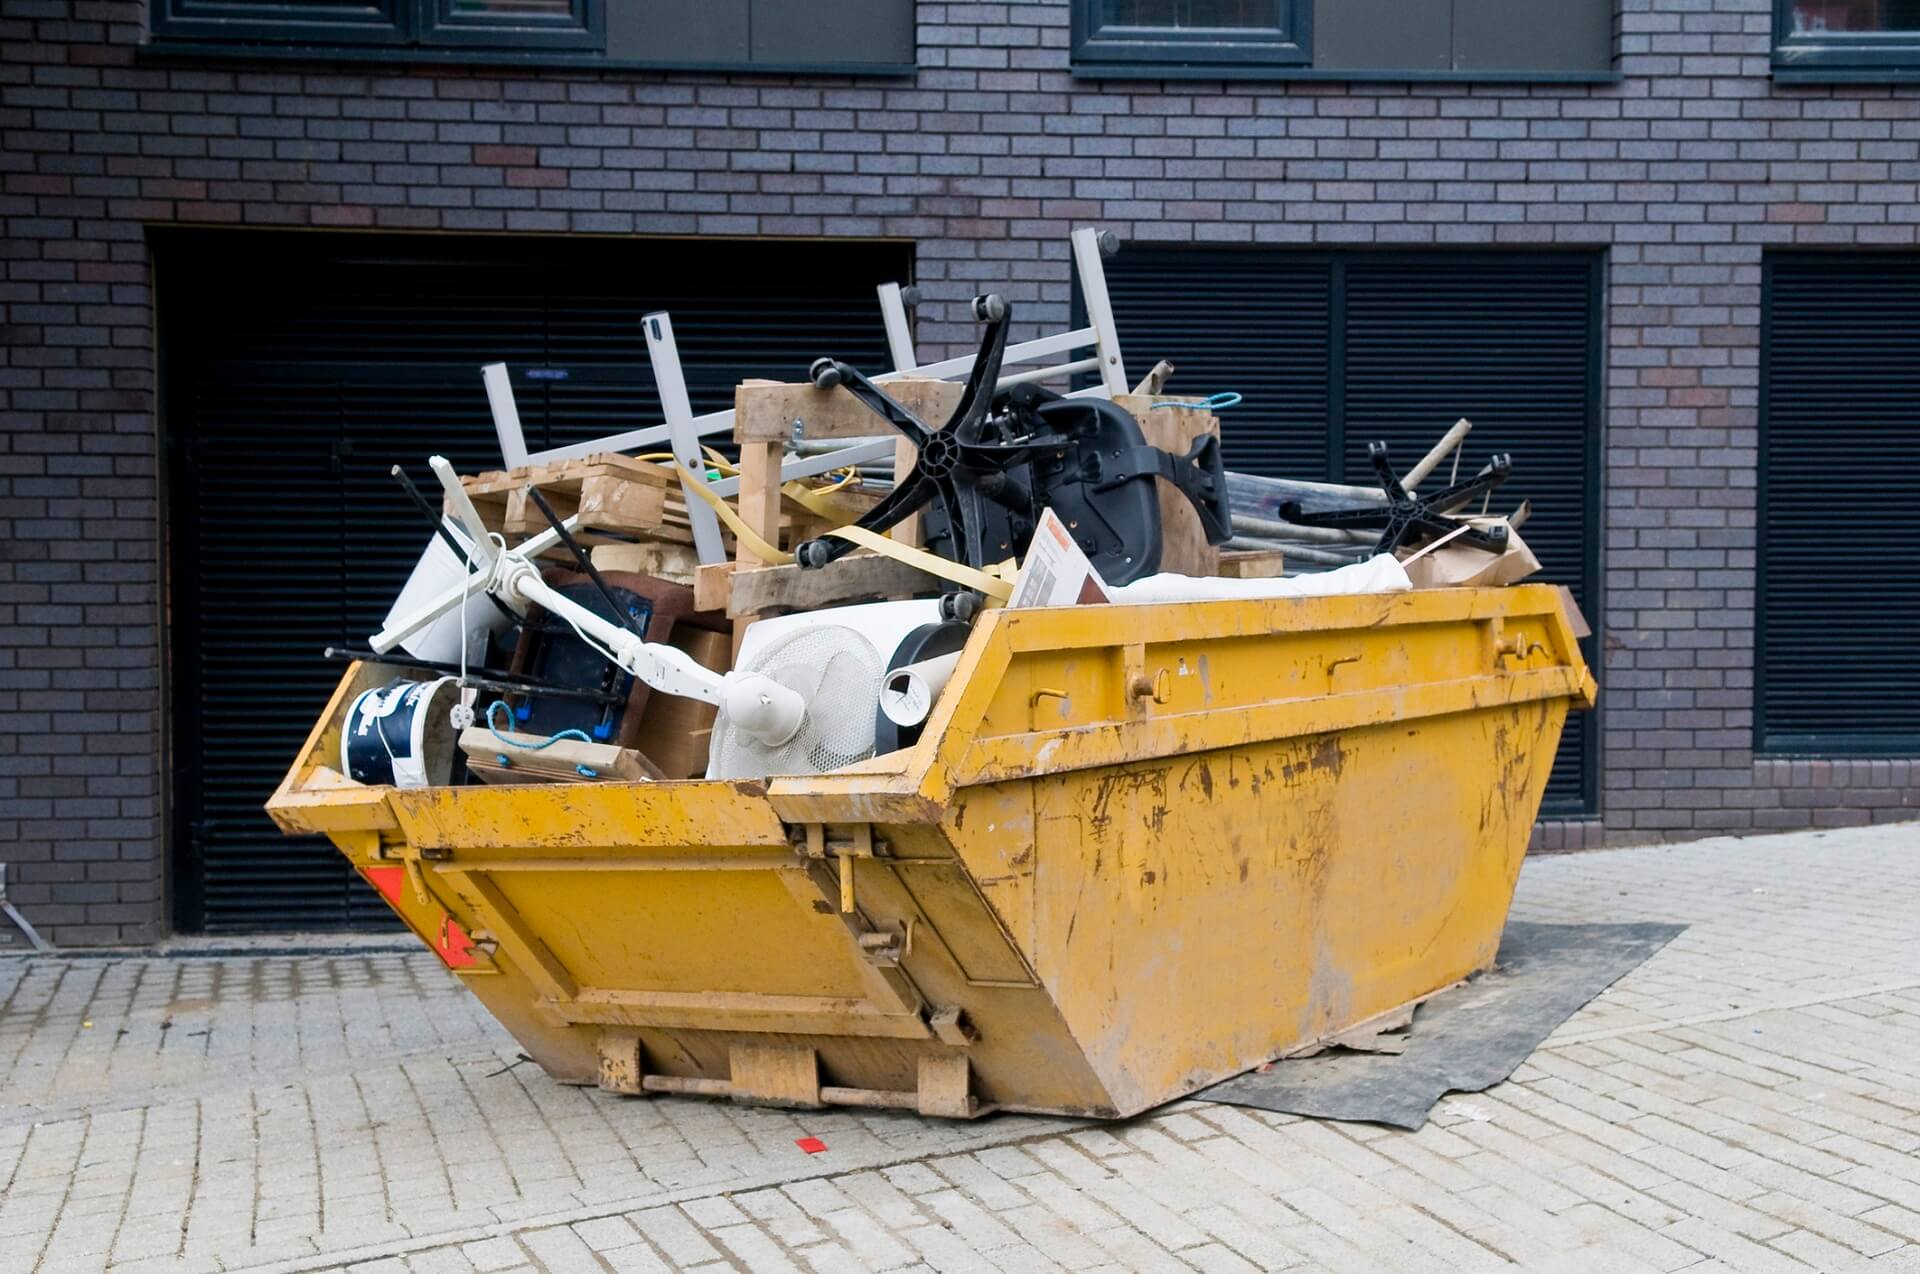 Rubbish & Debris Removal Dumpster Services-Colorado Dumpster Services of Longmont